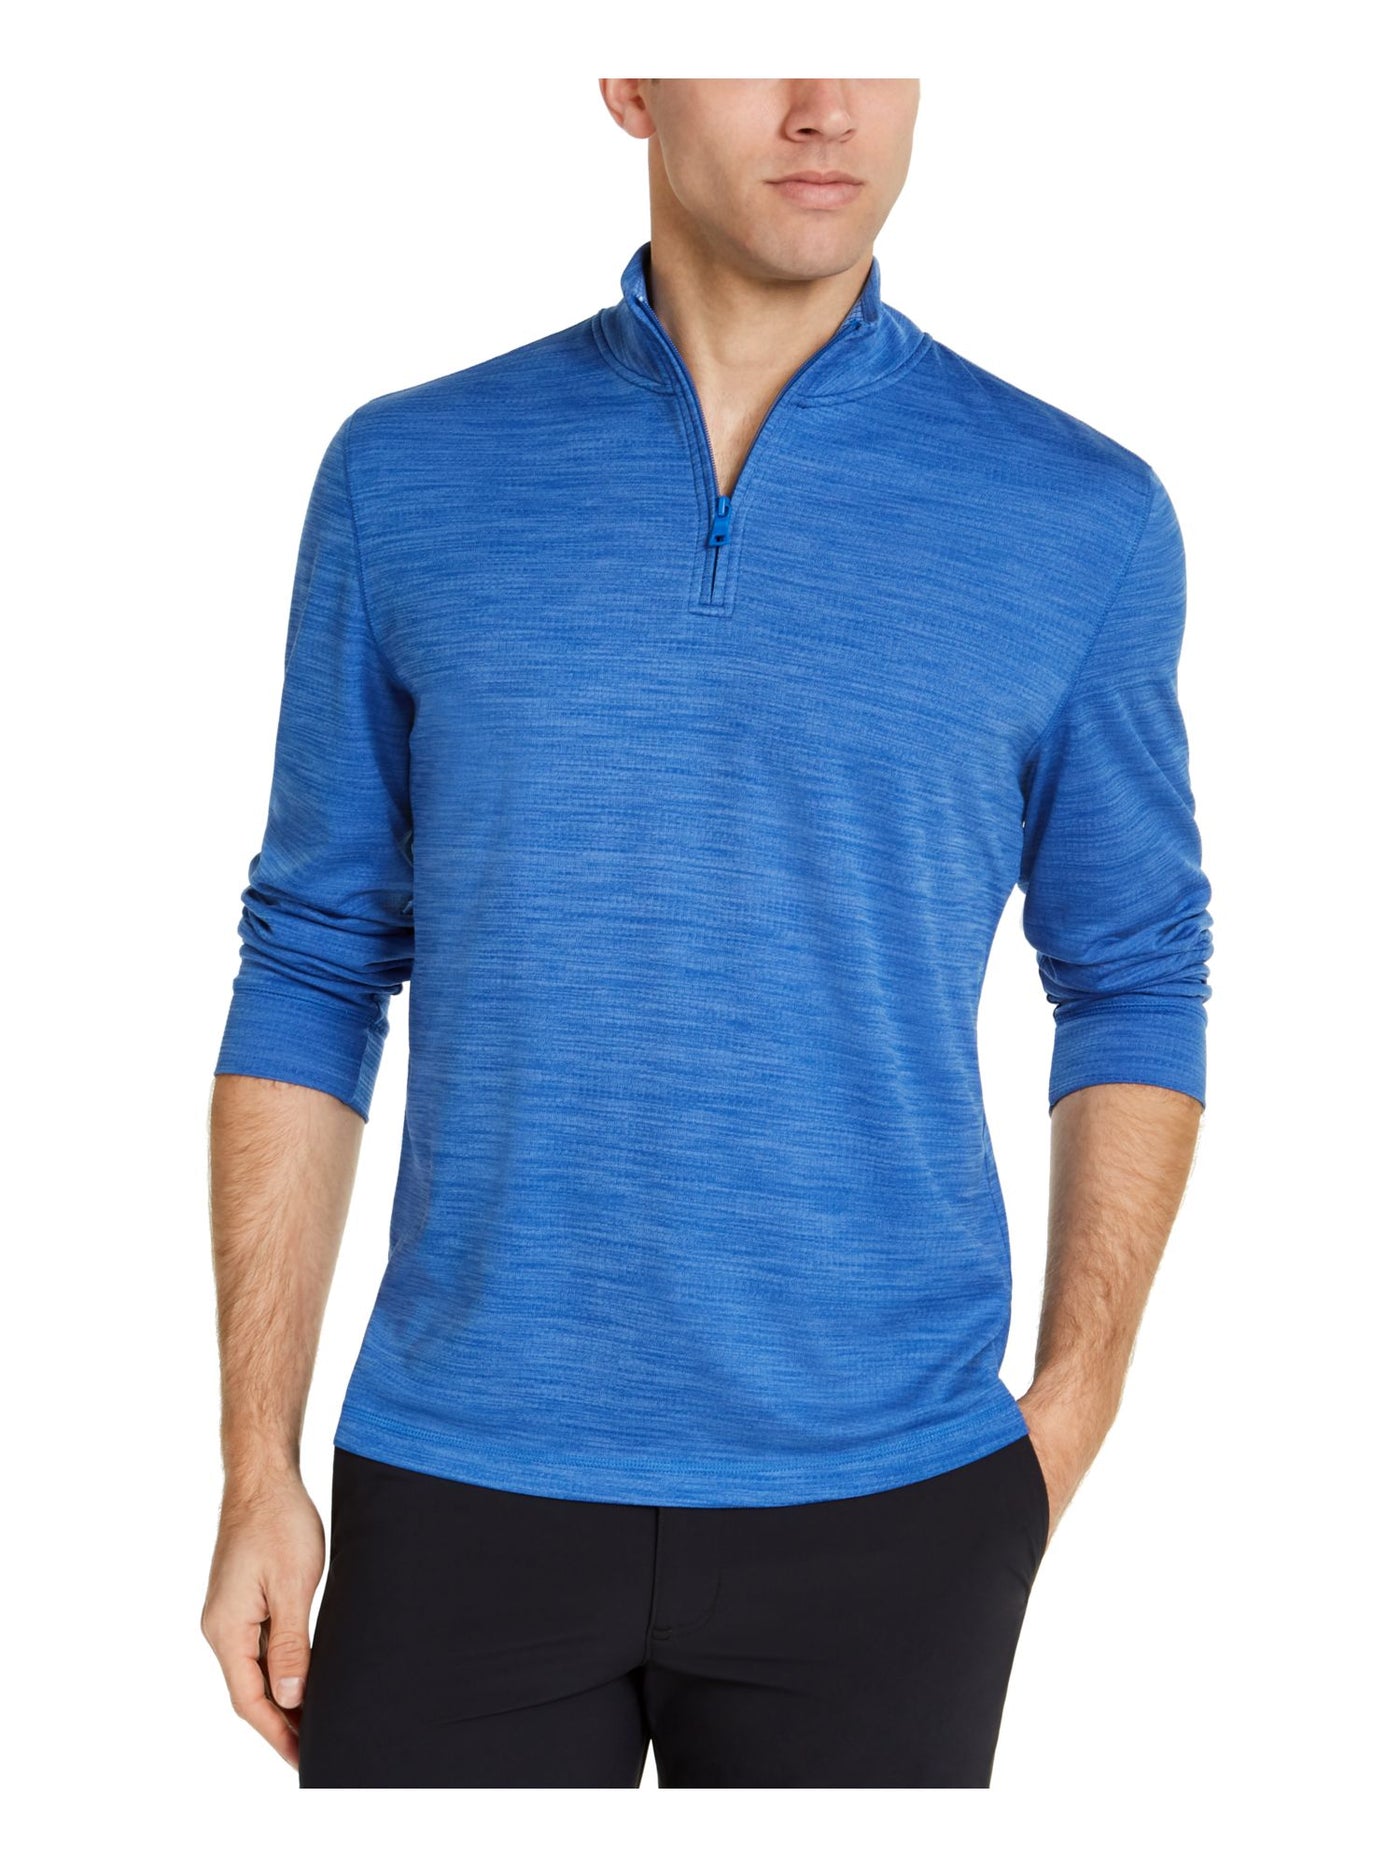 CLUBROOM Mens Blue Heather Mock Classic Fit Quarter-Zip Sweatshirt M